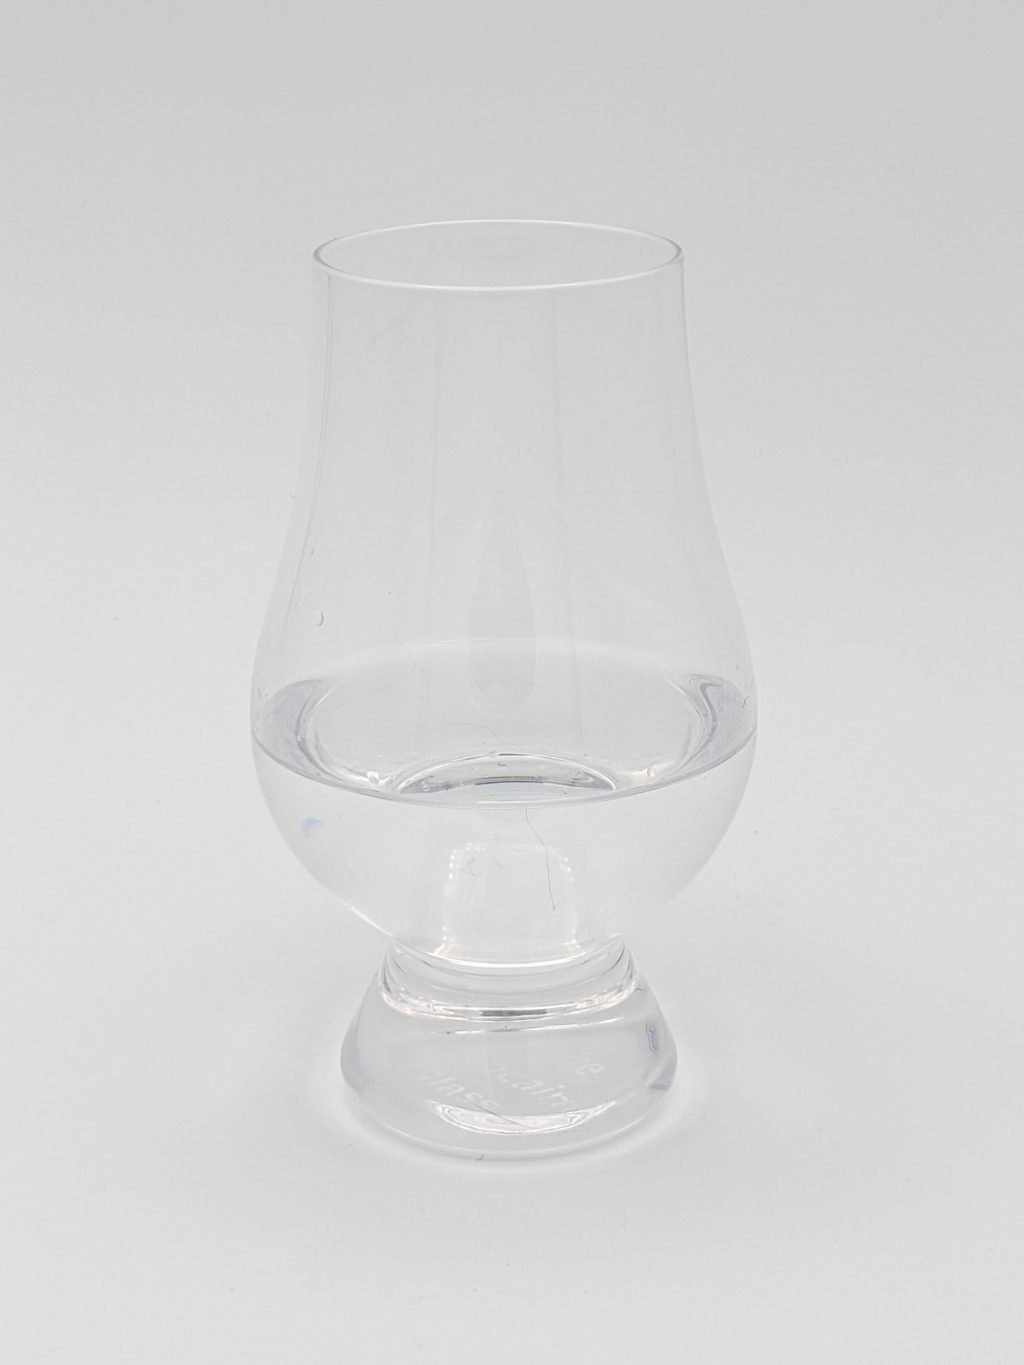 Clear liquid in a Glencairn glass